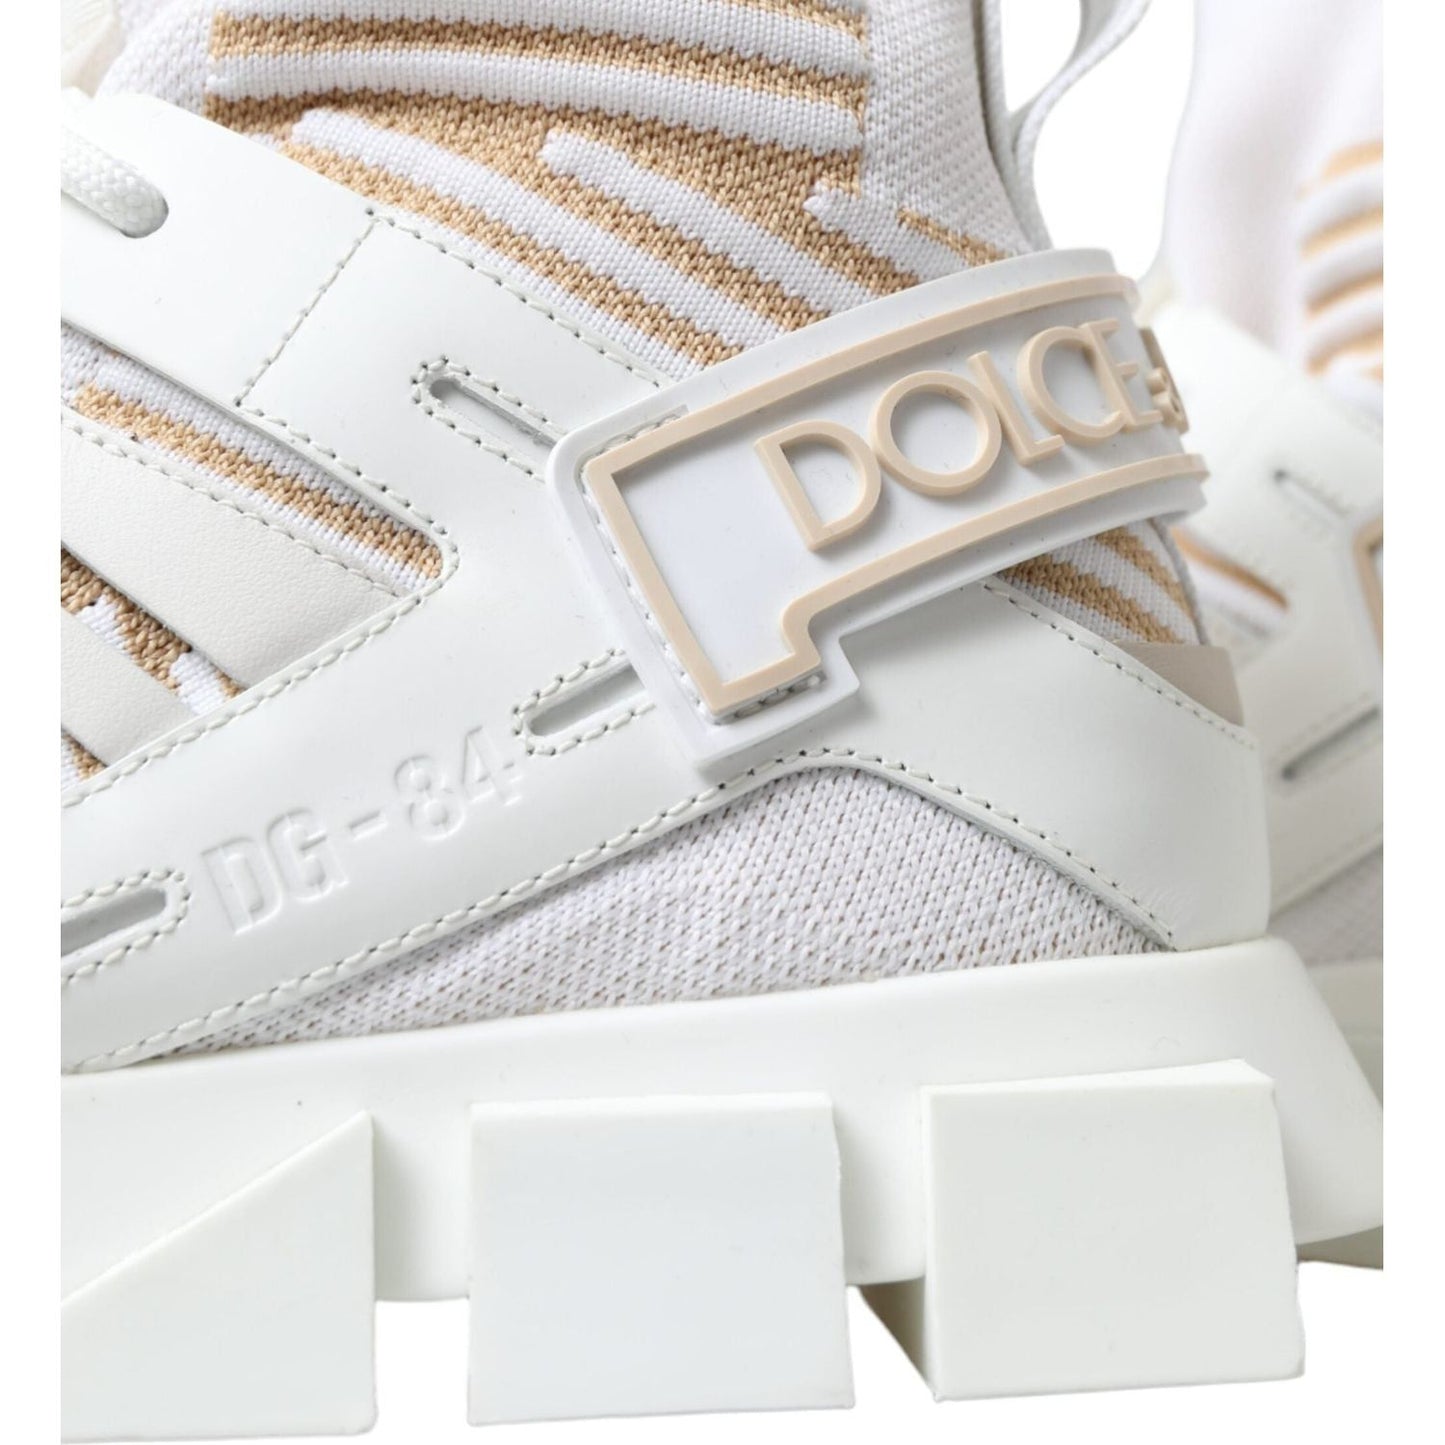 Dolce & Gabbana Elegant Sorrento Slip-On Sneakers in White and Beige white-beige-sorrento-socks-sneakers-shoes-1 465A2450-BG-scaled-7ed27c6c-e04.jpg